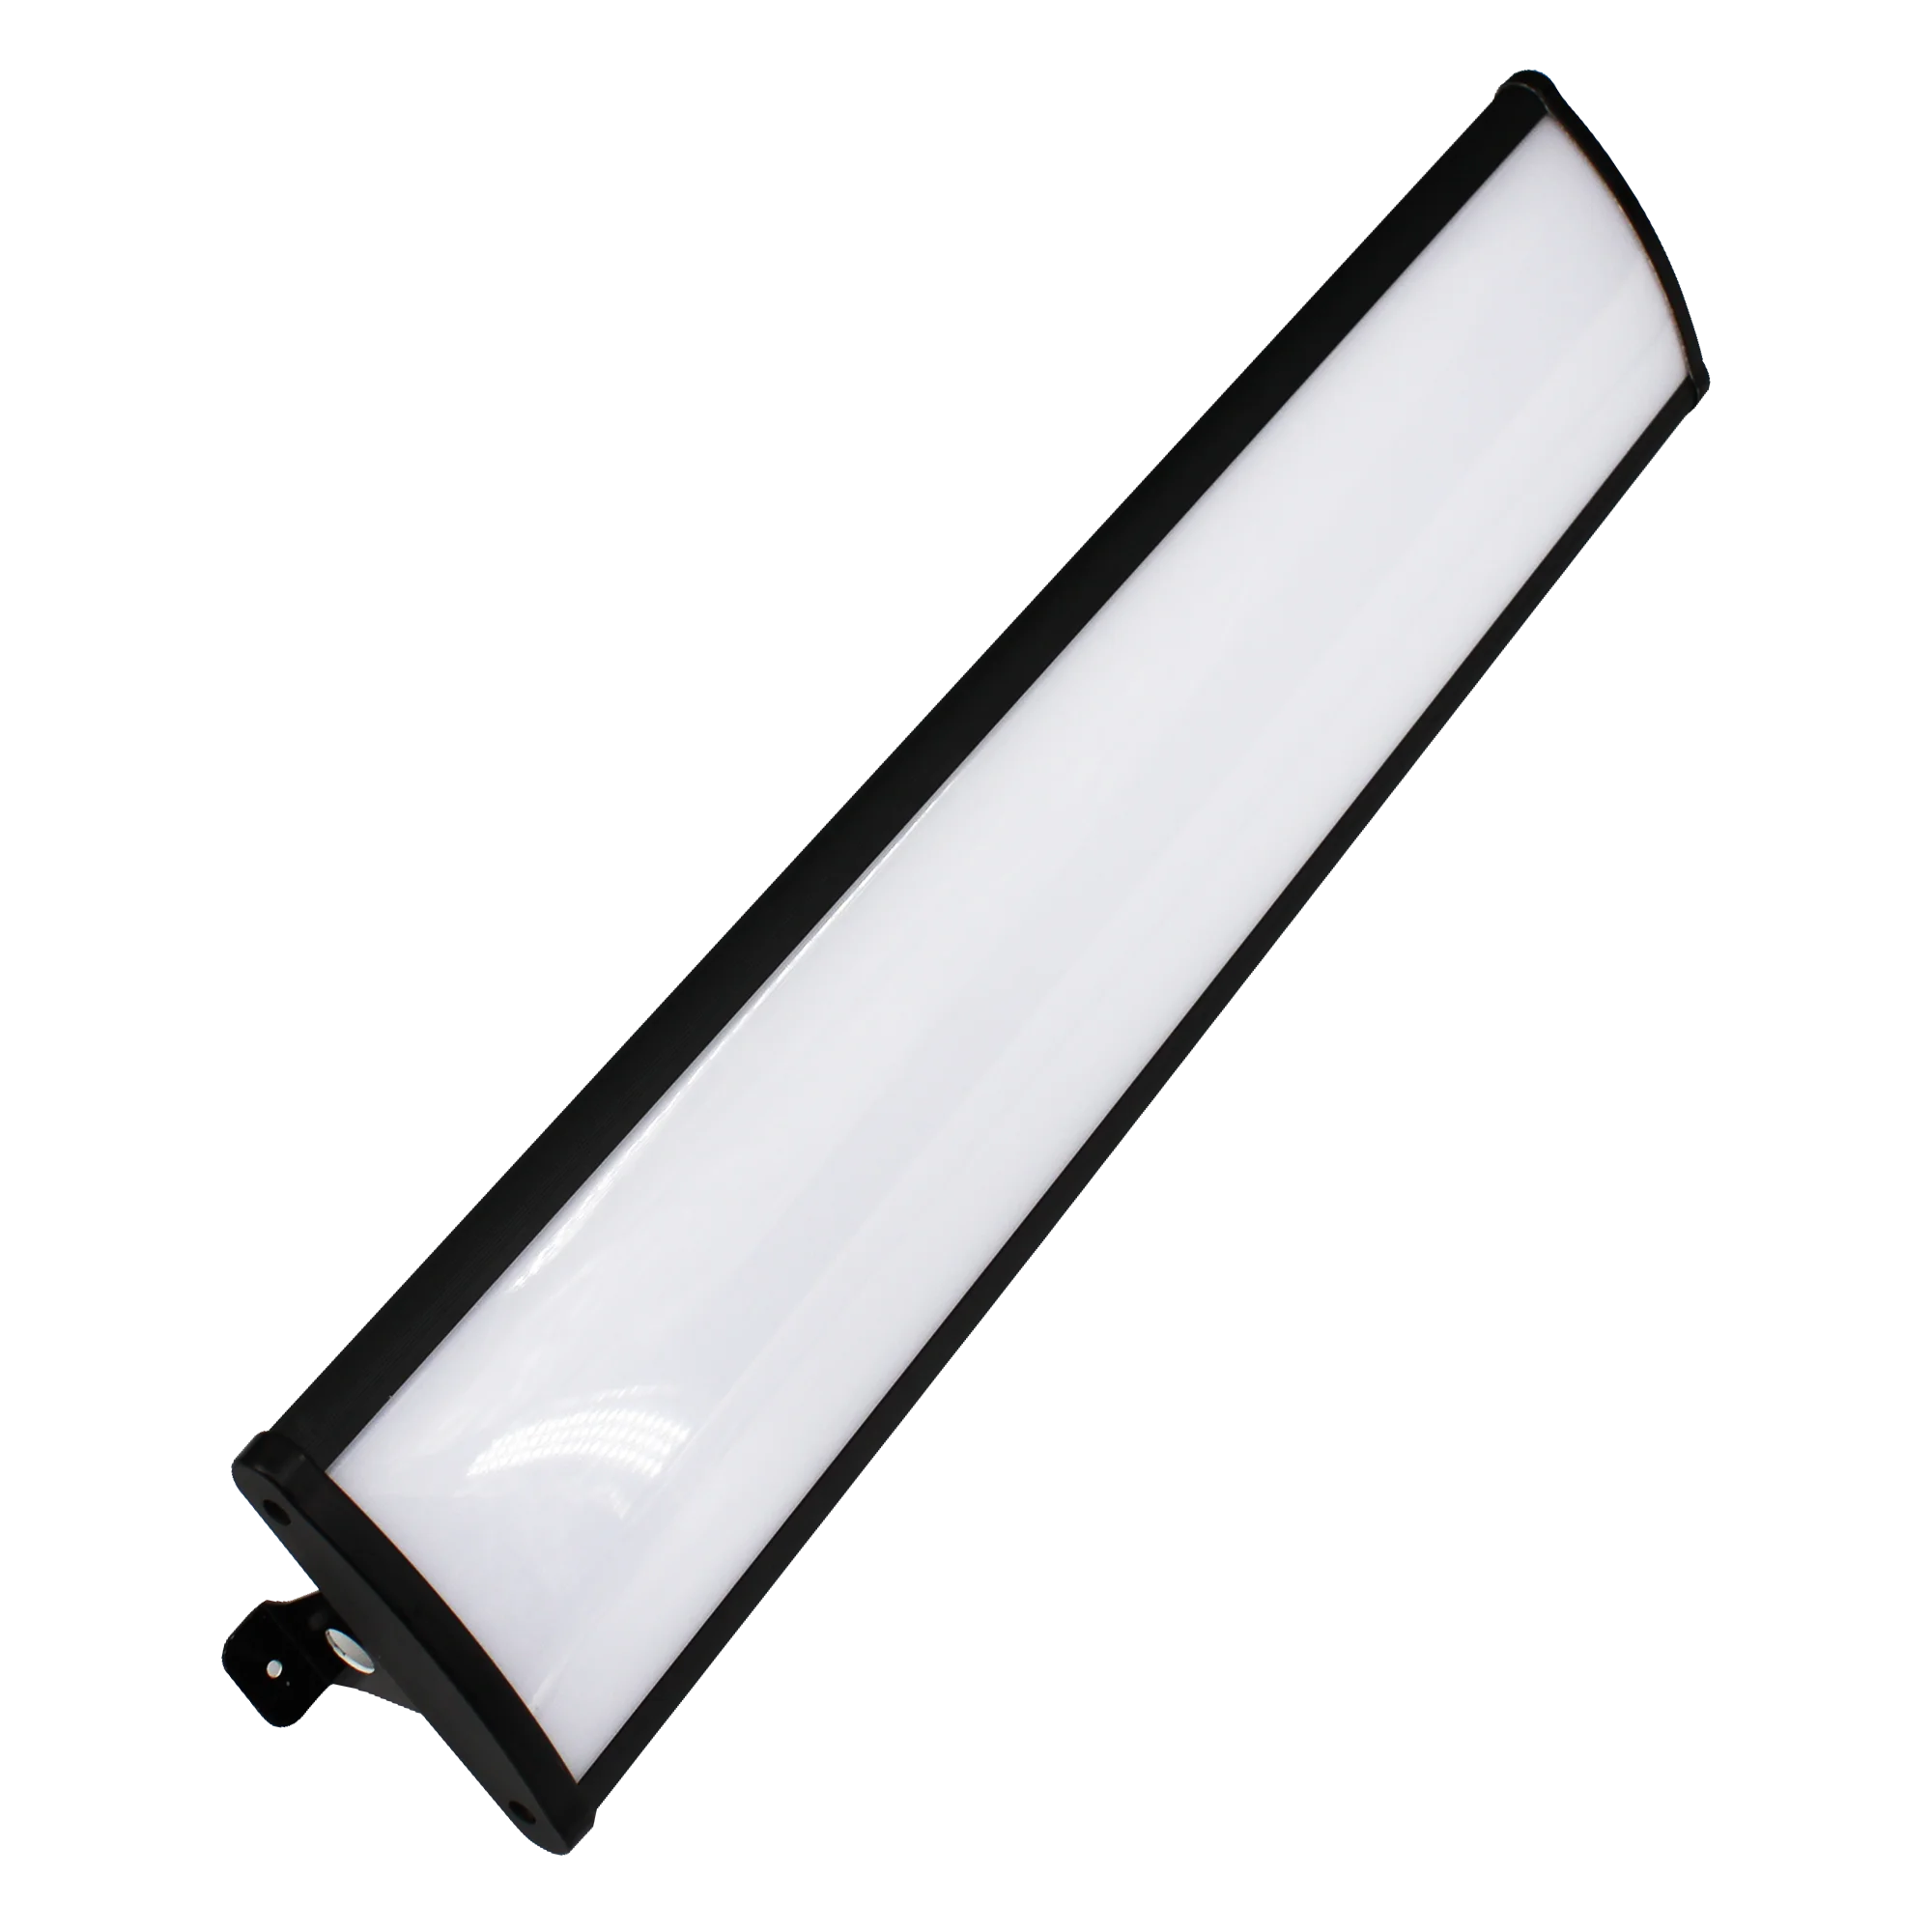 ShineLong 150 watt four foot high power dimmable shop light led single high bay light for industry